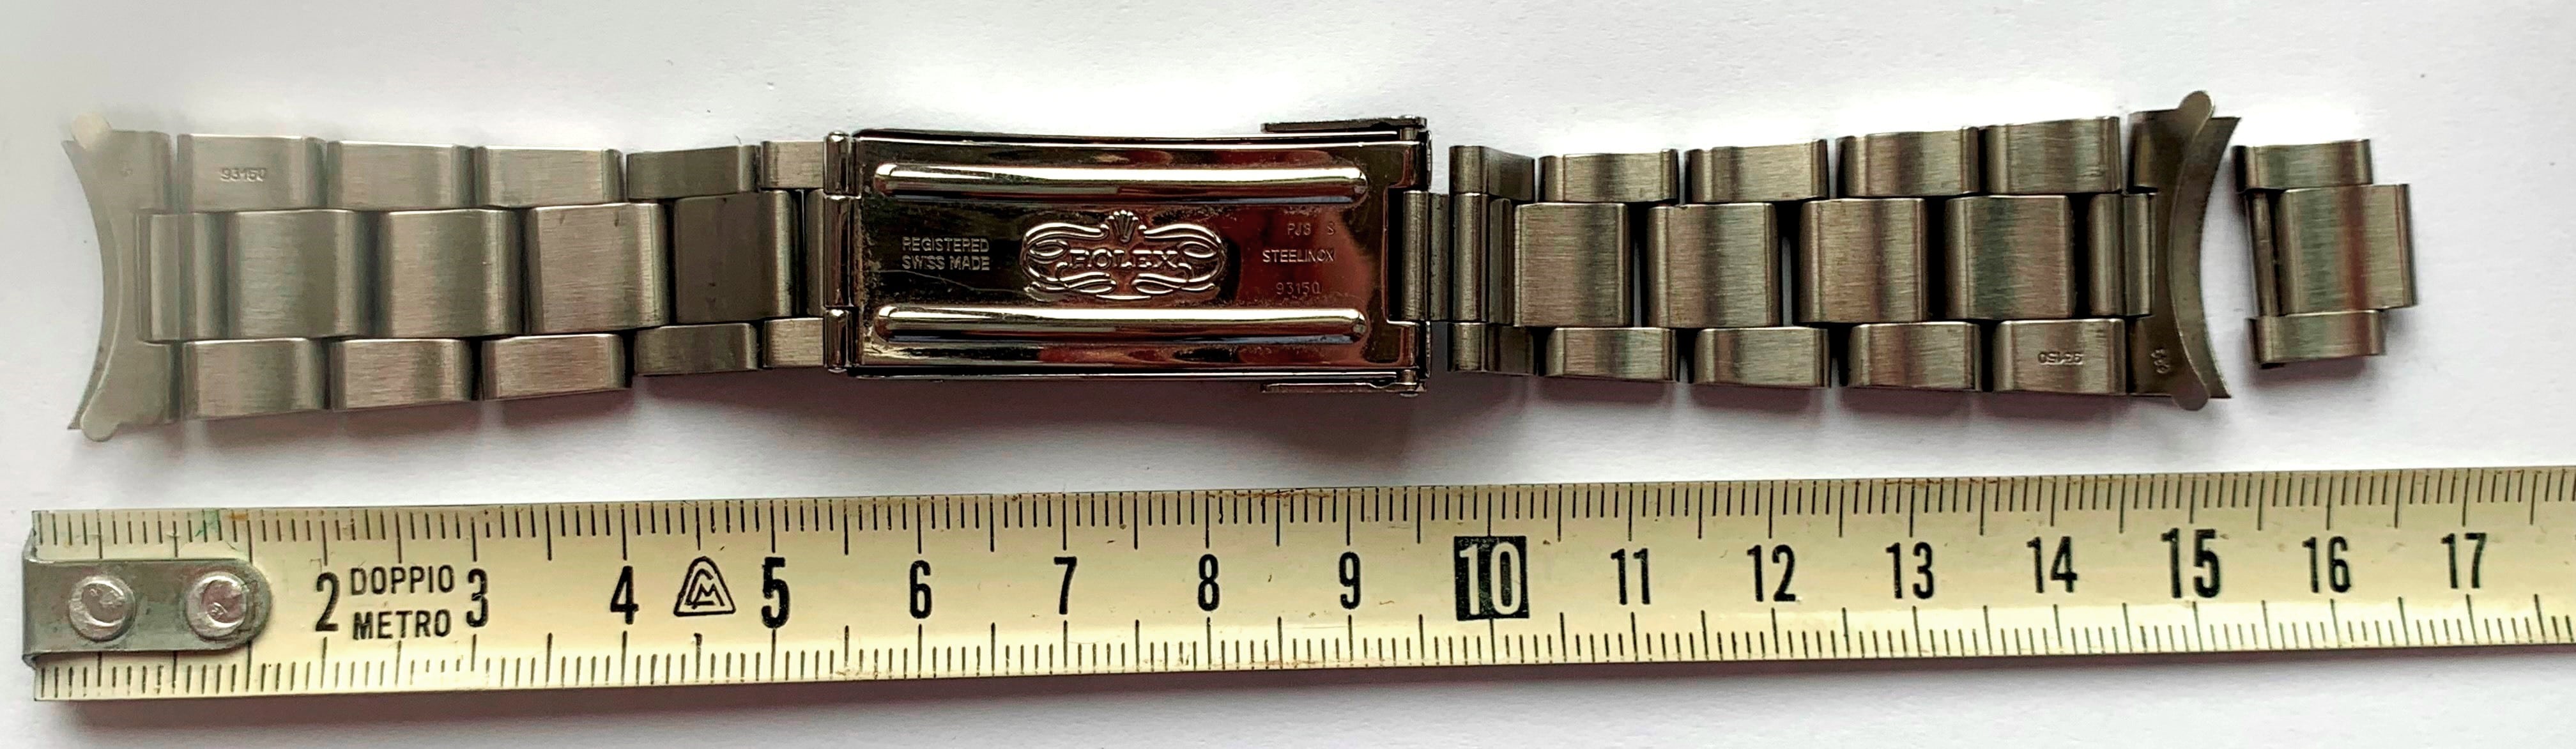 Rolex Bracelet 93150 Submariner Stainless Steel Authentic Original S / E07  | eBay